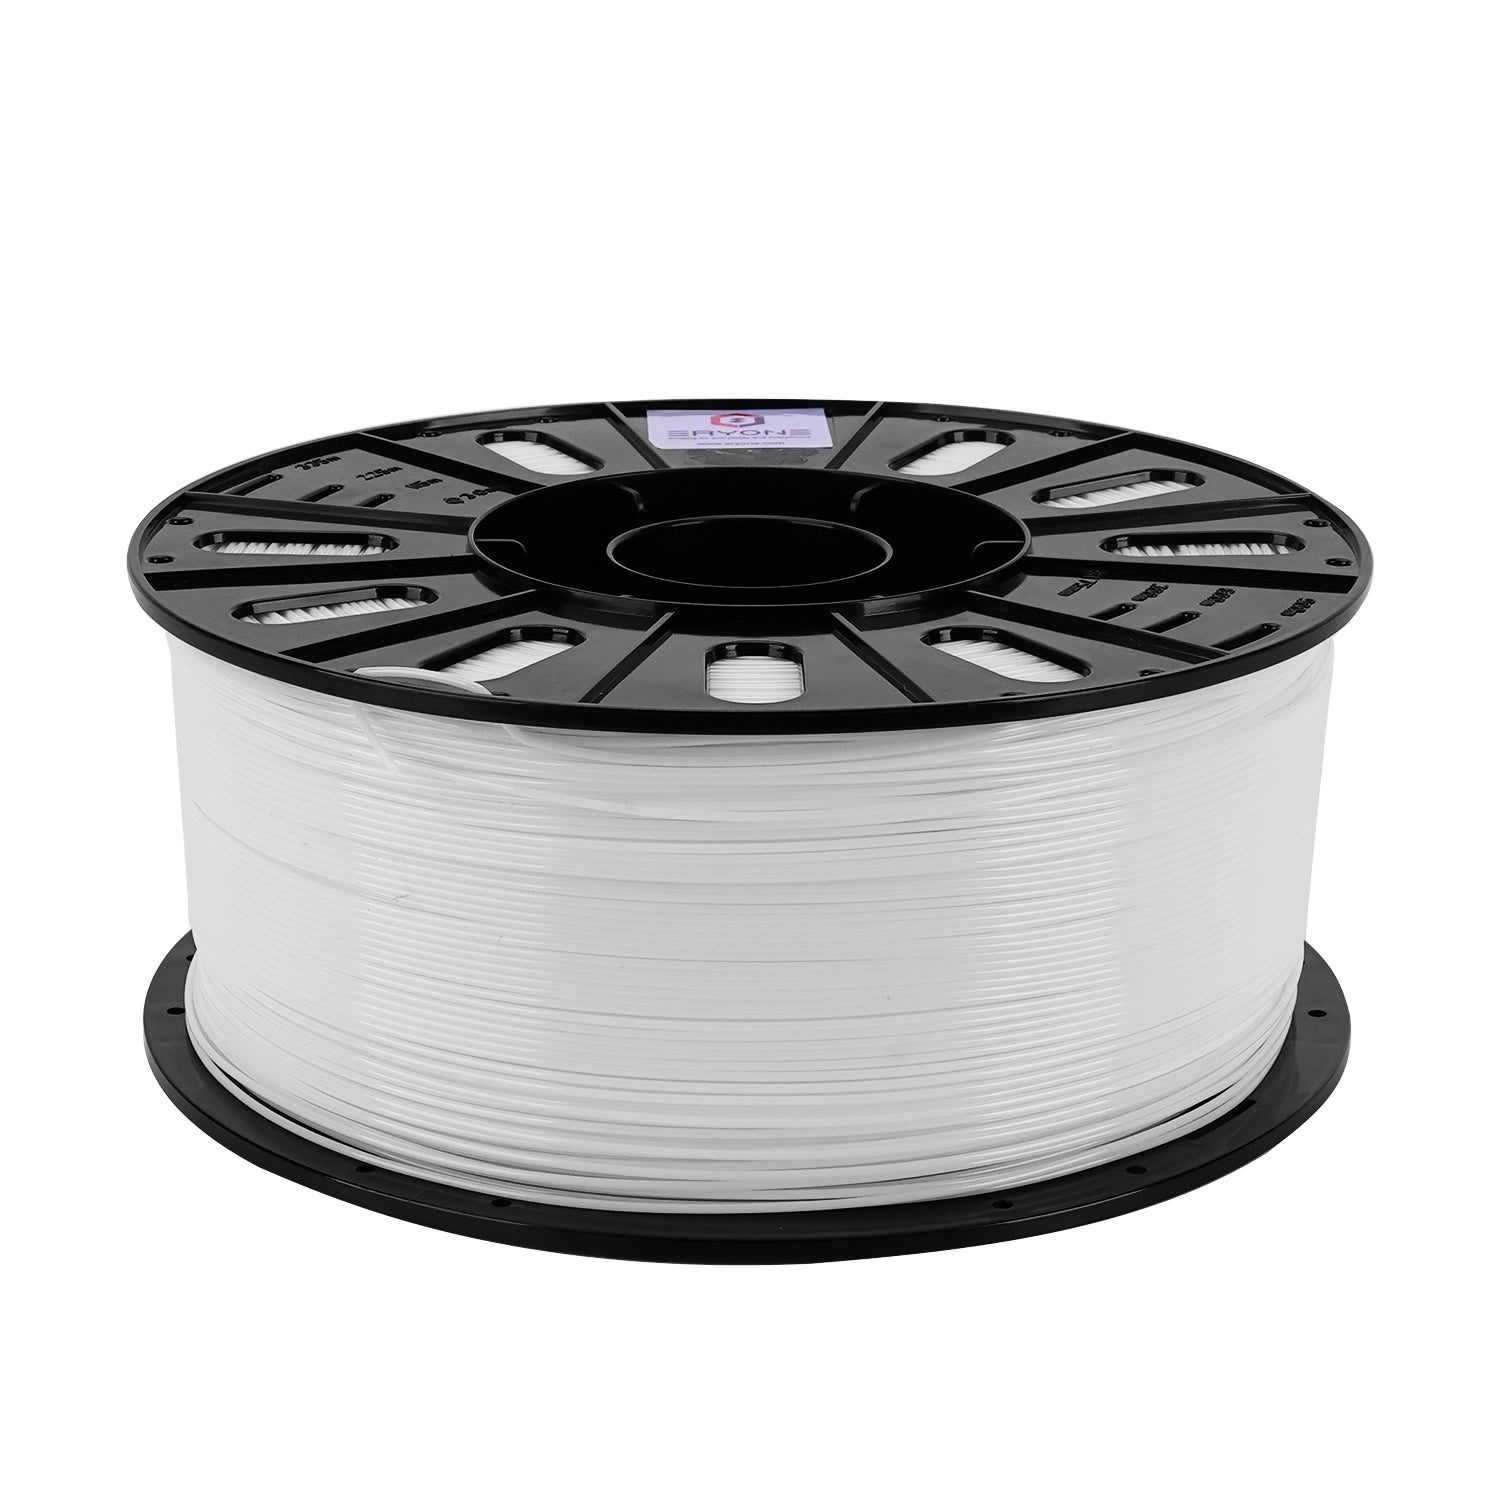 ERYONE PETG 3D Printer Filament 1.75mm, Dimensional Accuracy +/- 0.05 mm 3kg (6.6LBS)/Spool